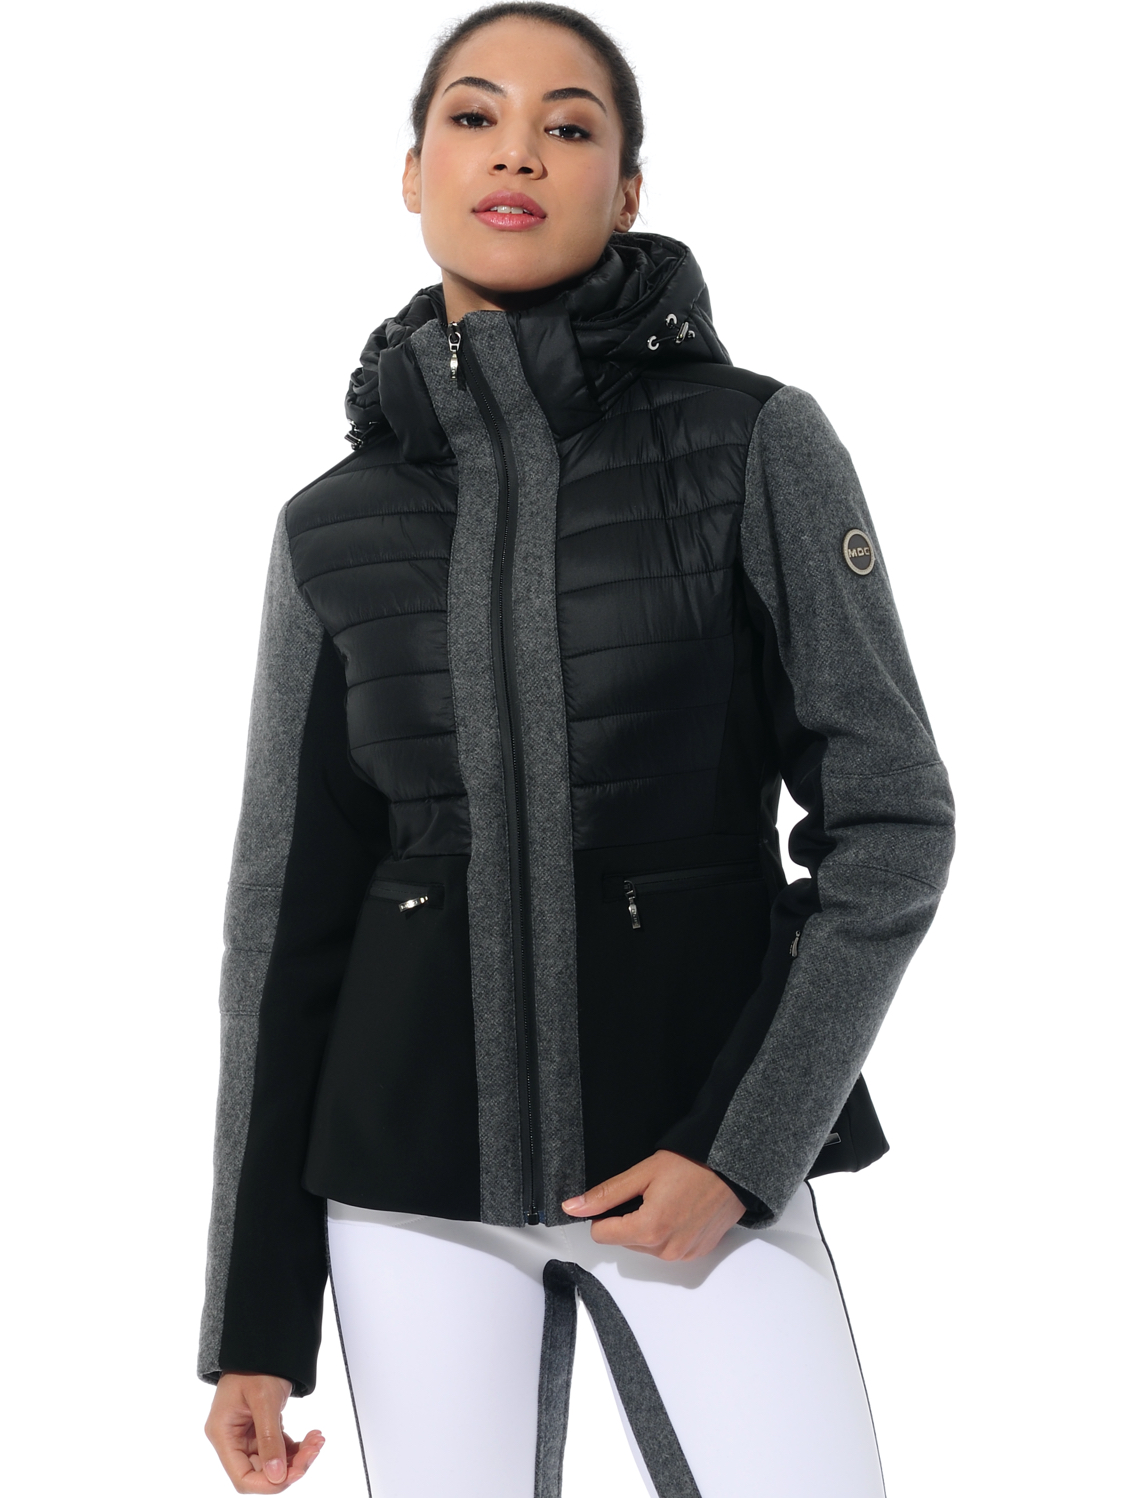 stretch ski jacket with loden details black/grey 